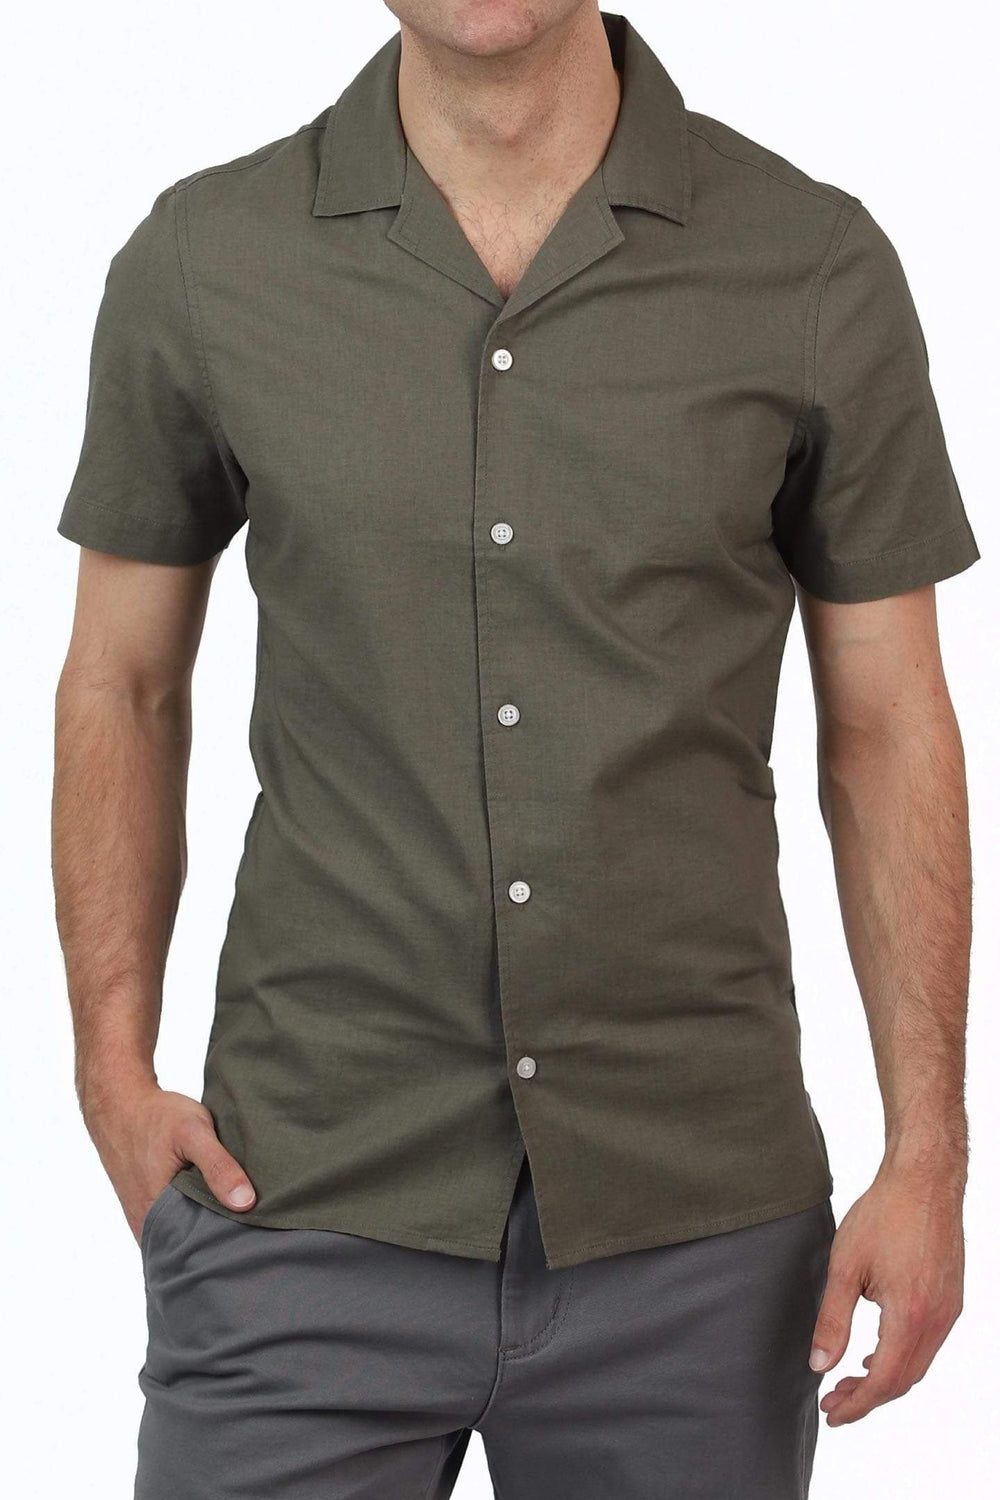 Buy Canopy Green Open Collar Shirt for Short Men | Ash & Erie   Short Sleeve Everyday Shirts